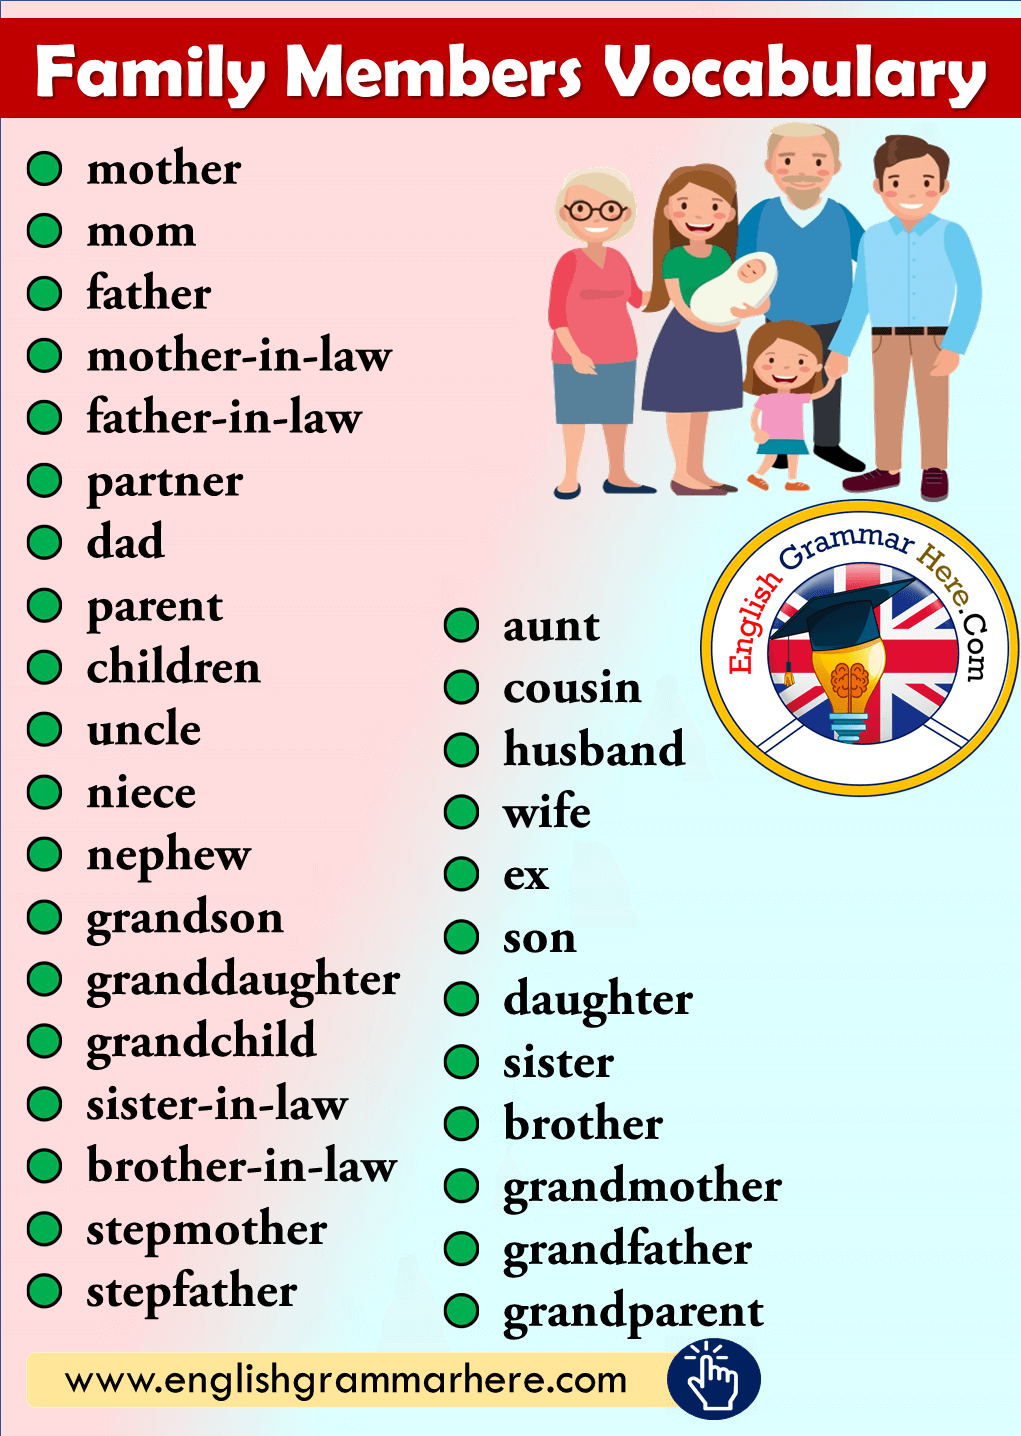 English Family Members Vocabulary List